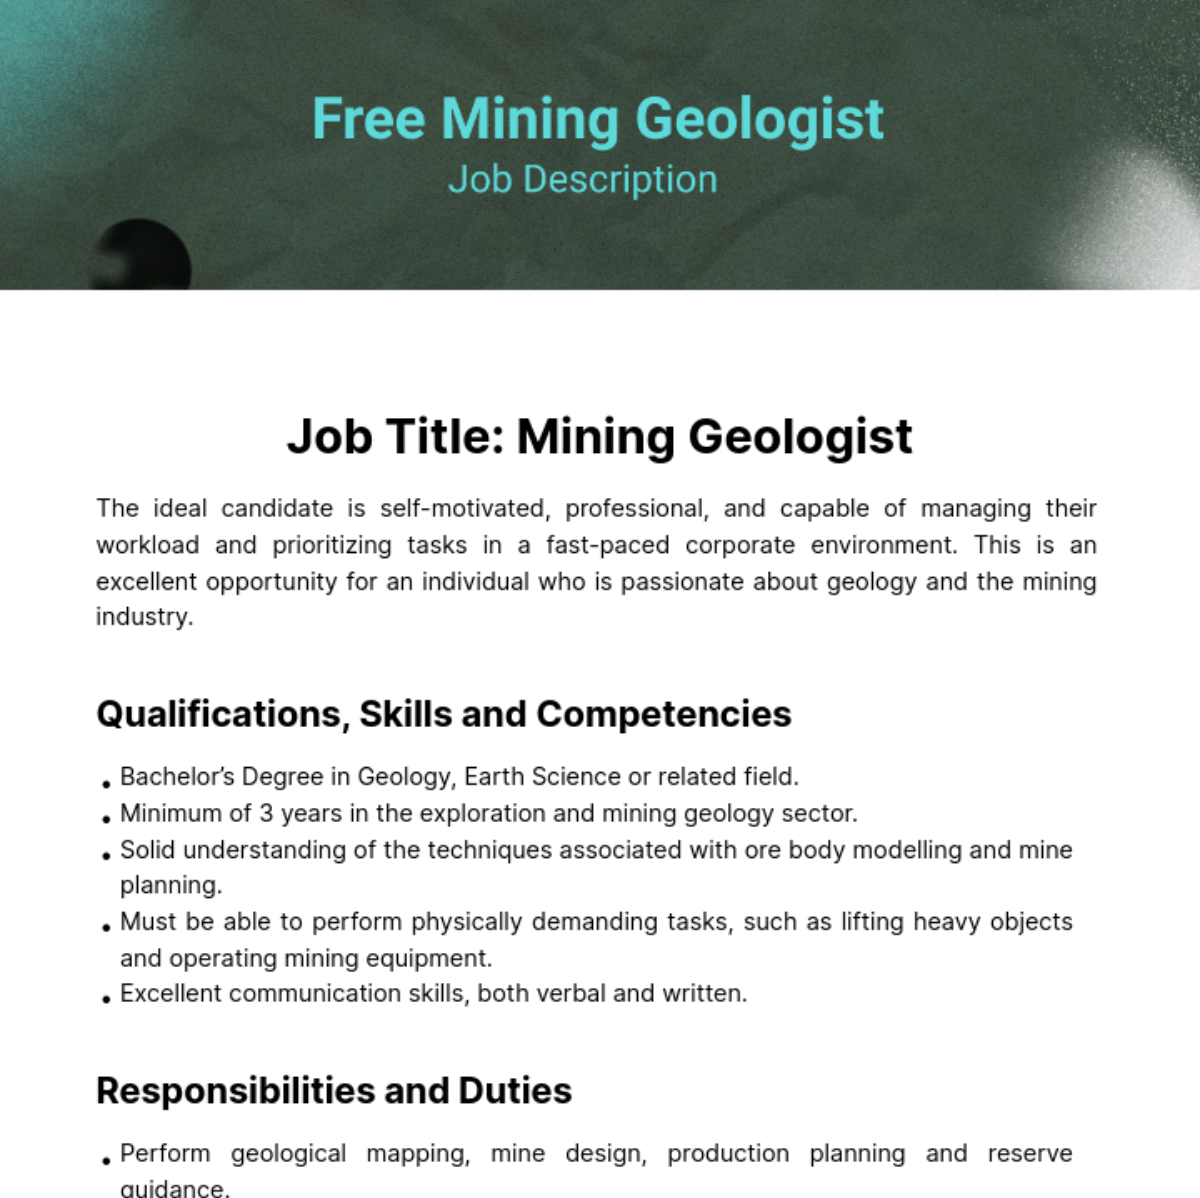 Free Mining Geologist Job Description Template